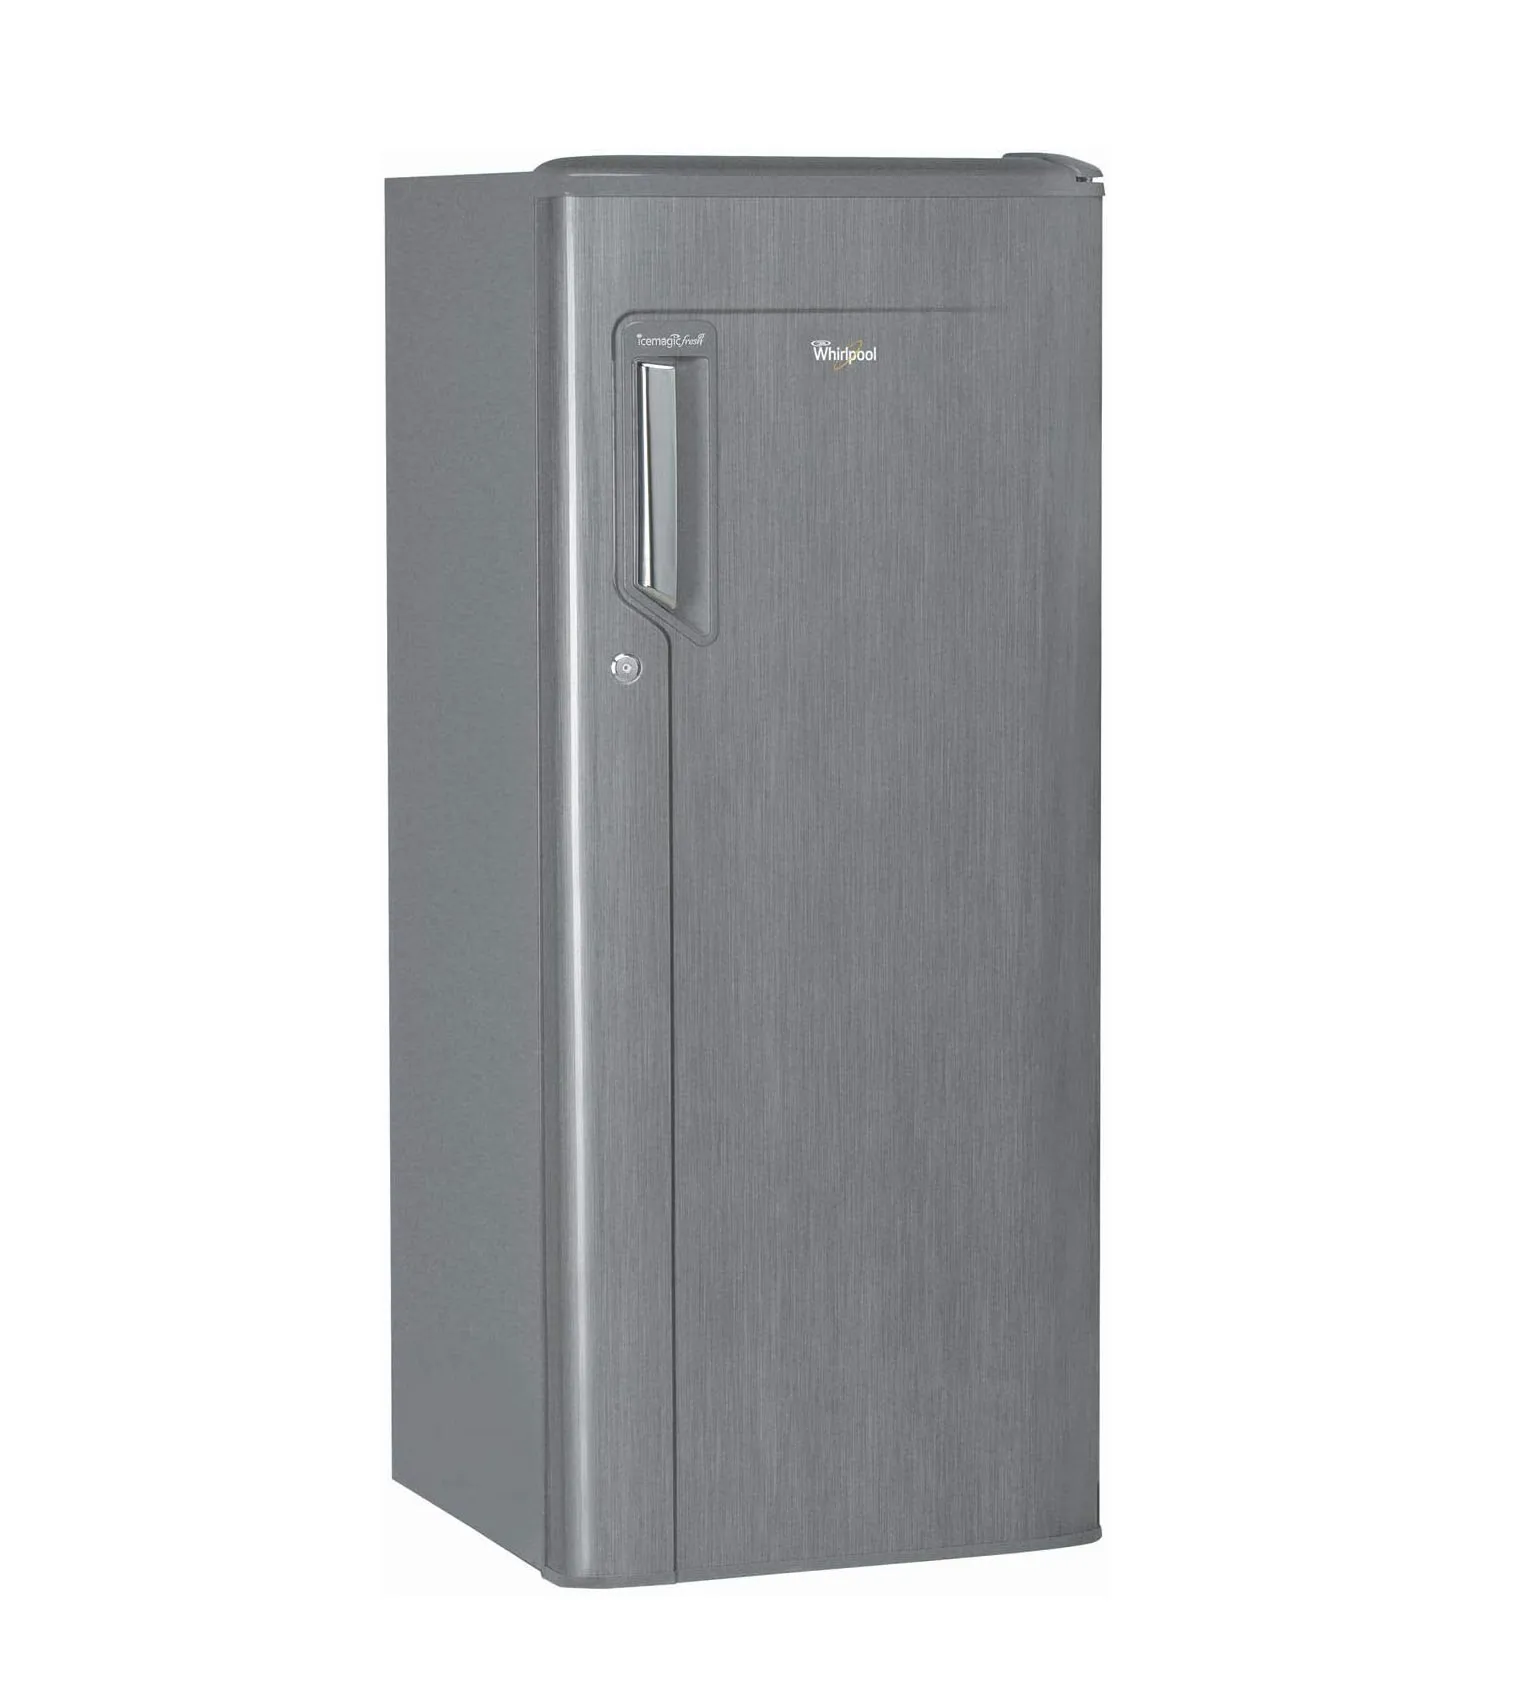 Whirlpool 190 Liters Single Door Refrigerator, Grey Wmd205″Min 1 year manufacturer warranty”